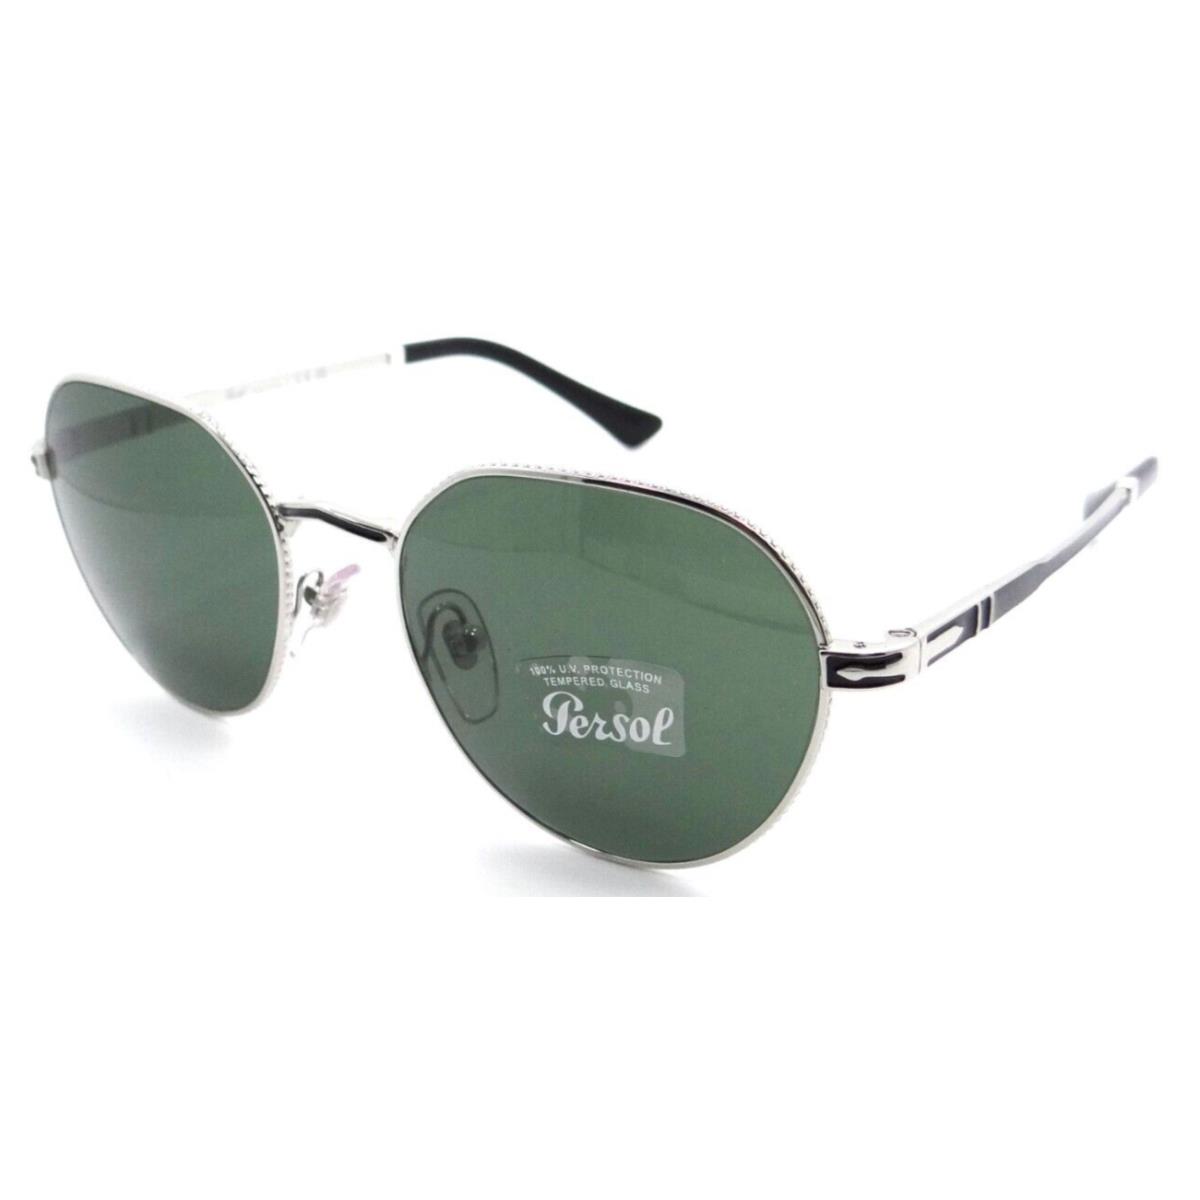 Persol Sunglasses PO 2486S 1113/31 53-19-145 Silver - Black /green Made in Italy